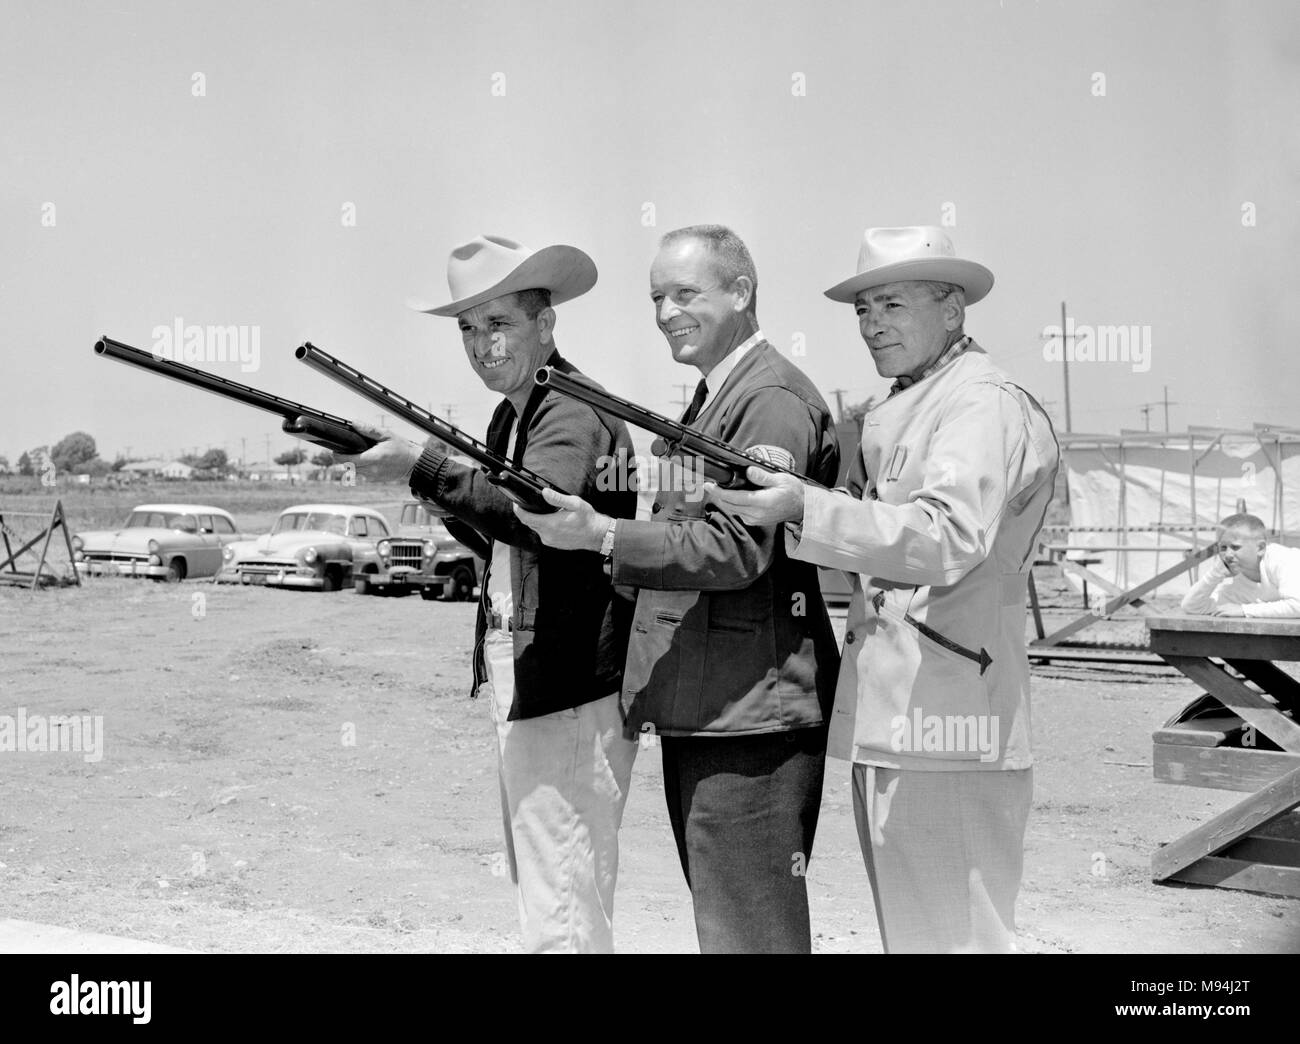 Armed with smiles three men brandish shotguns at a California gun club, ca. 1962. Stock Photo